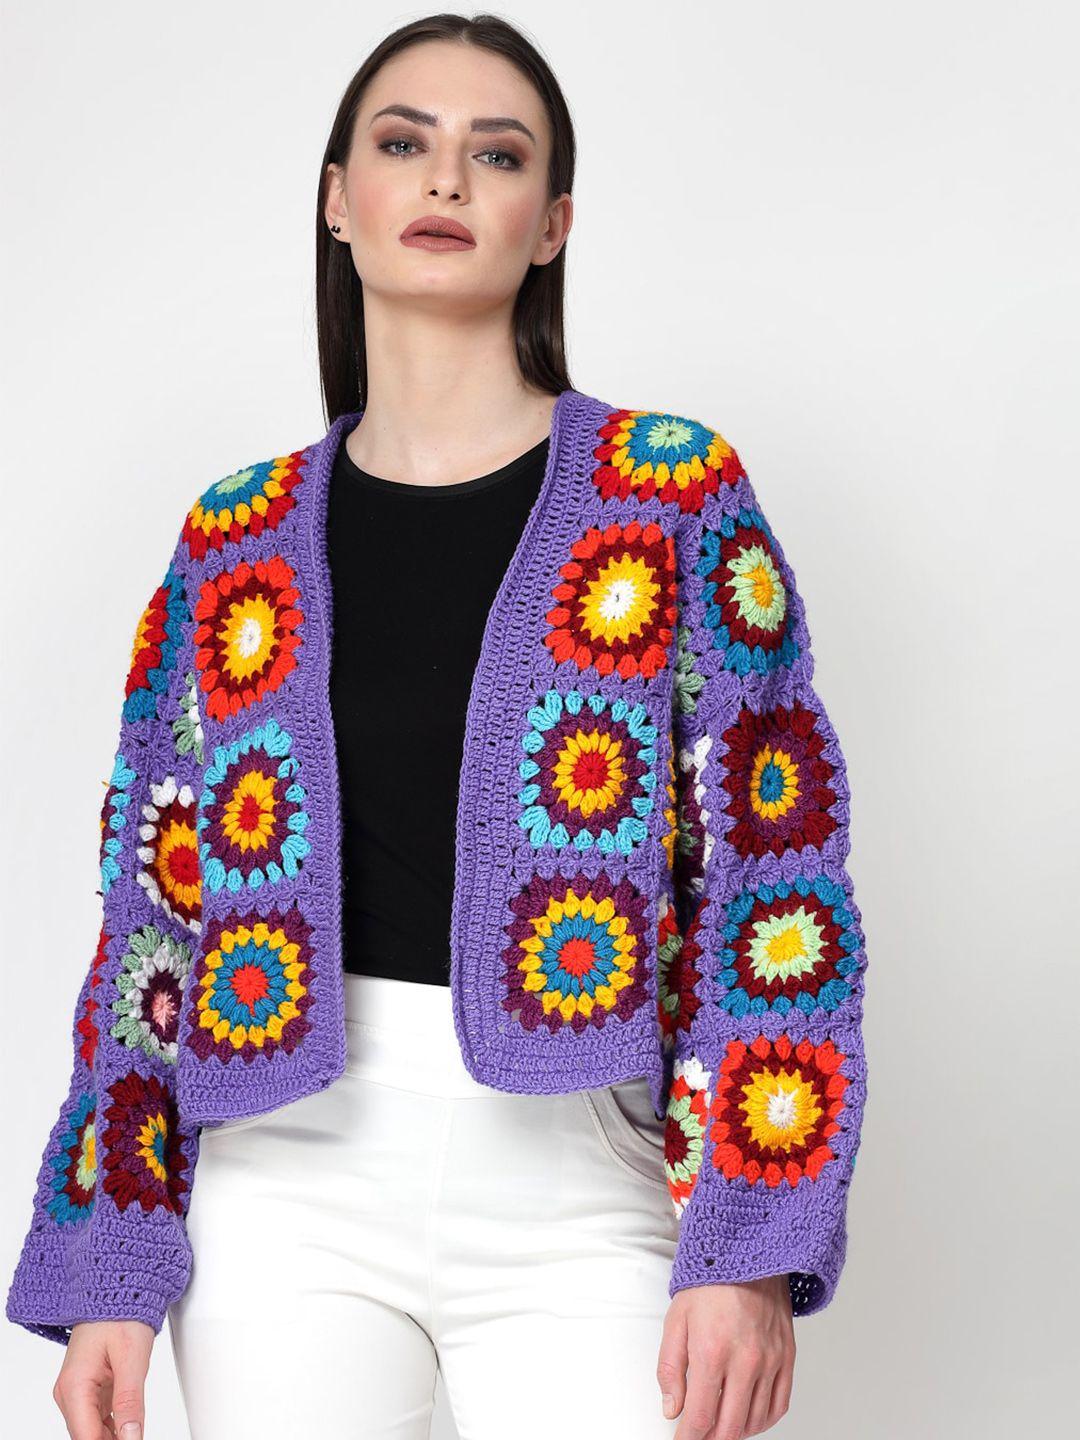 velvery crochet granny square acrylic front open sweater